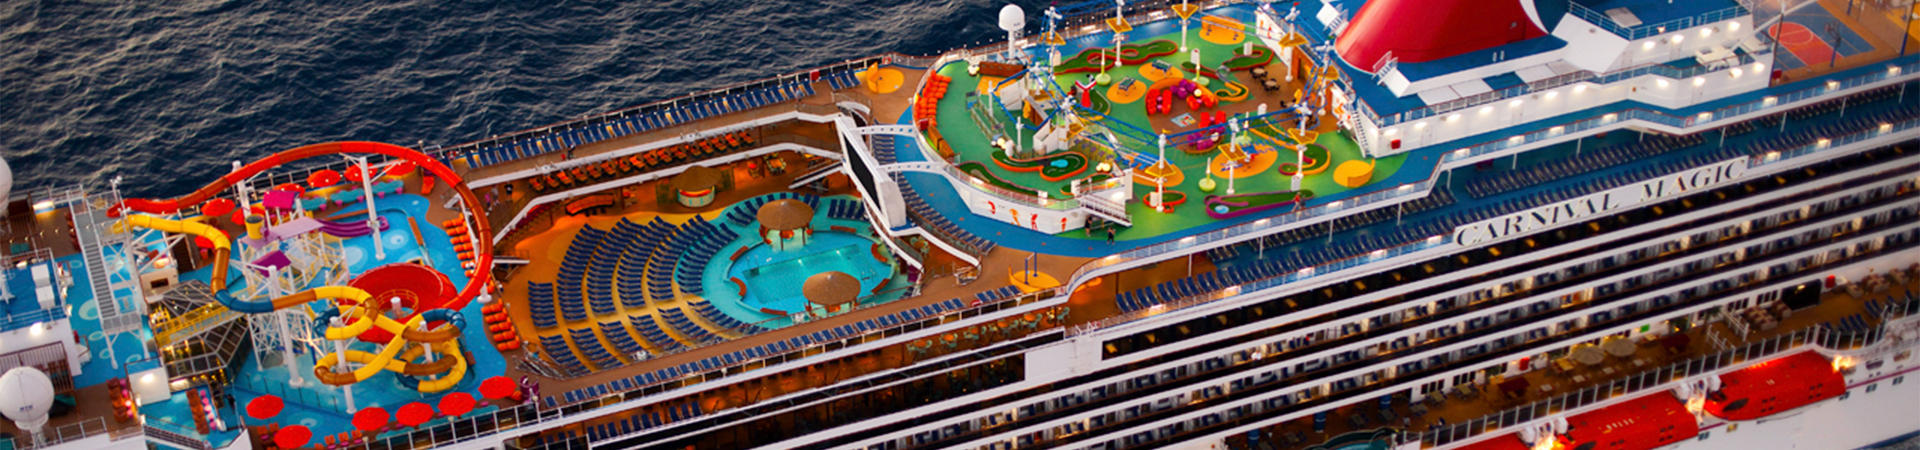 Choose Your Cruise Ship